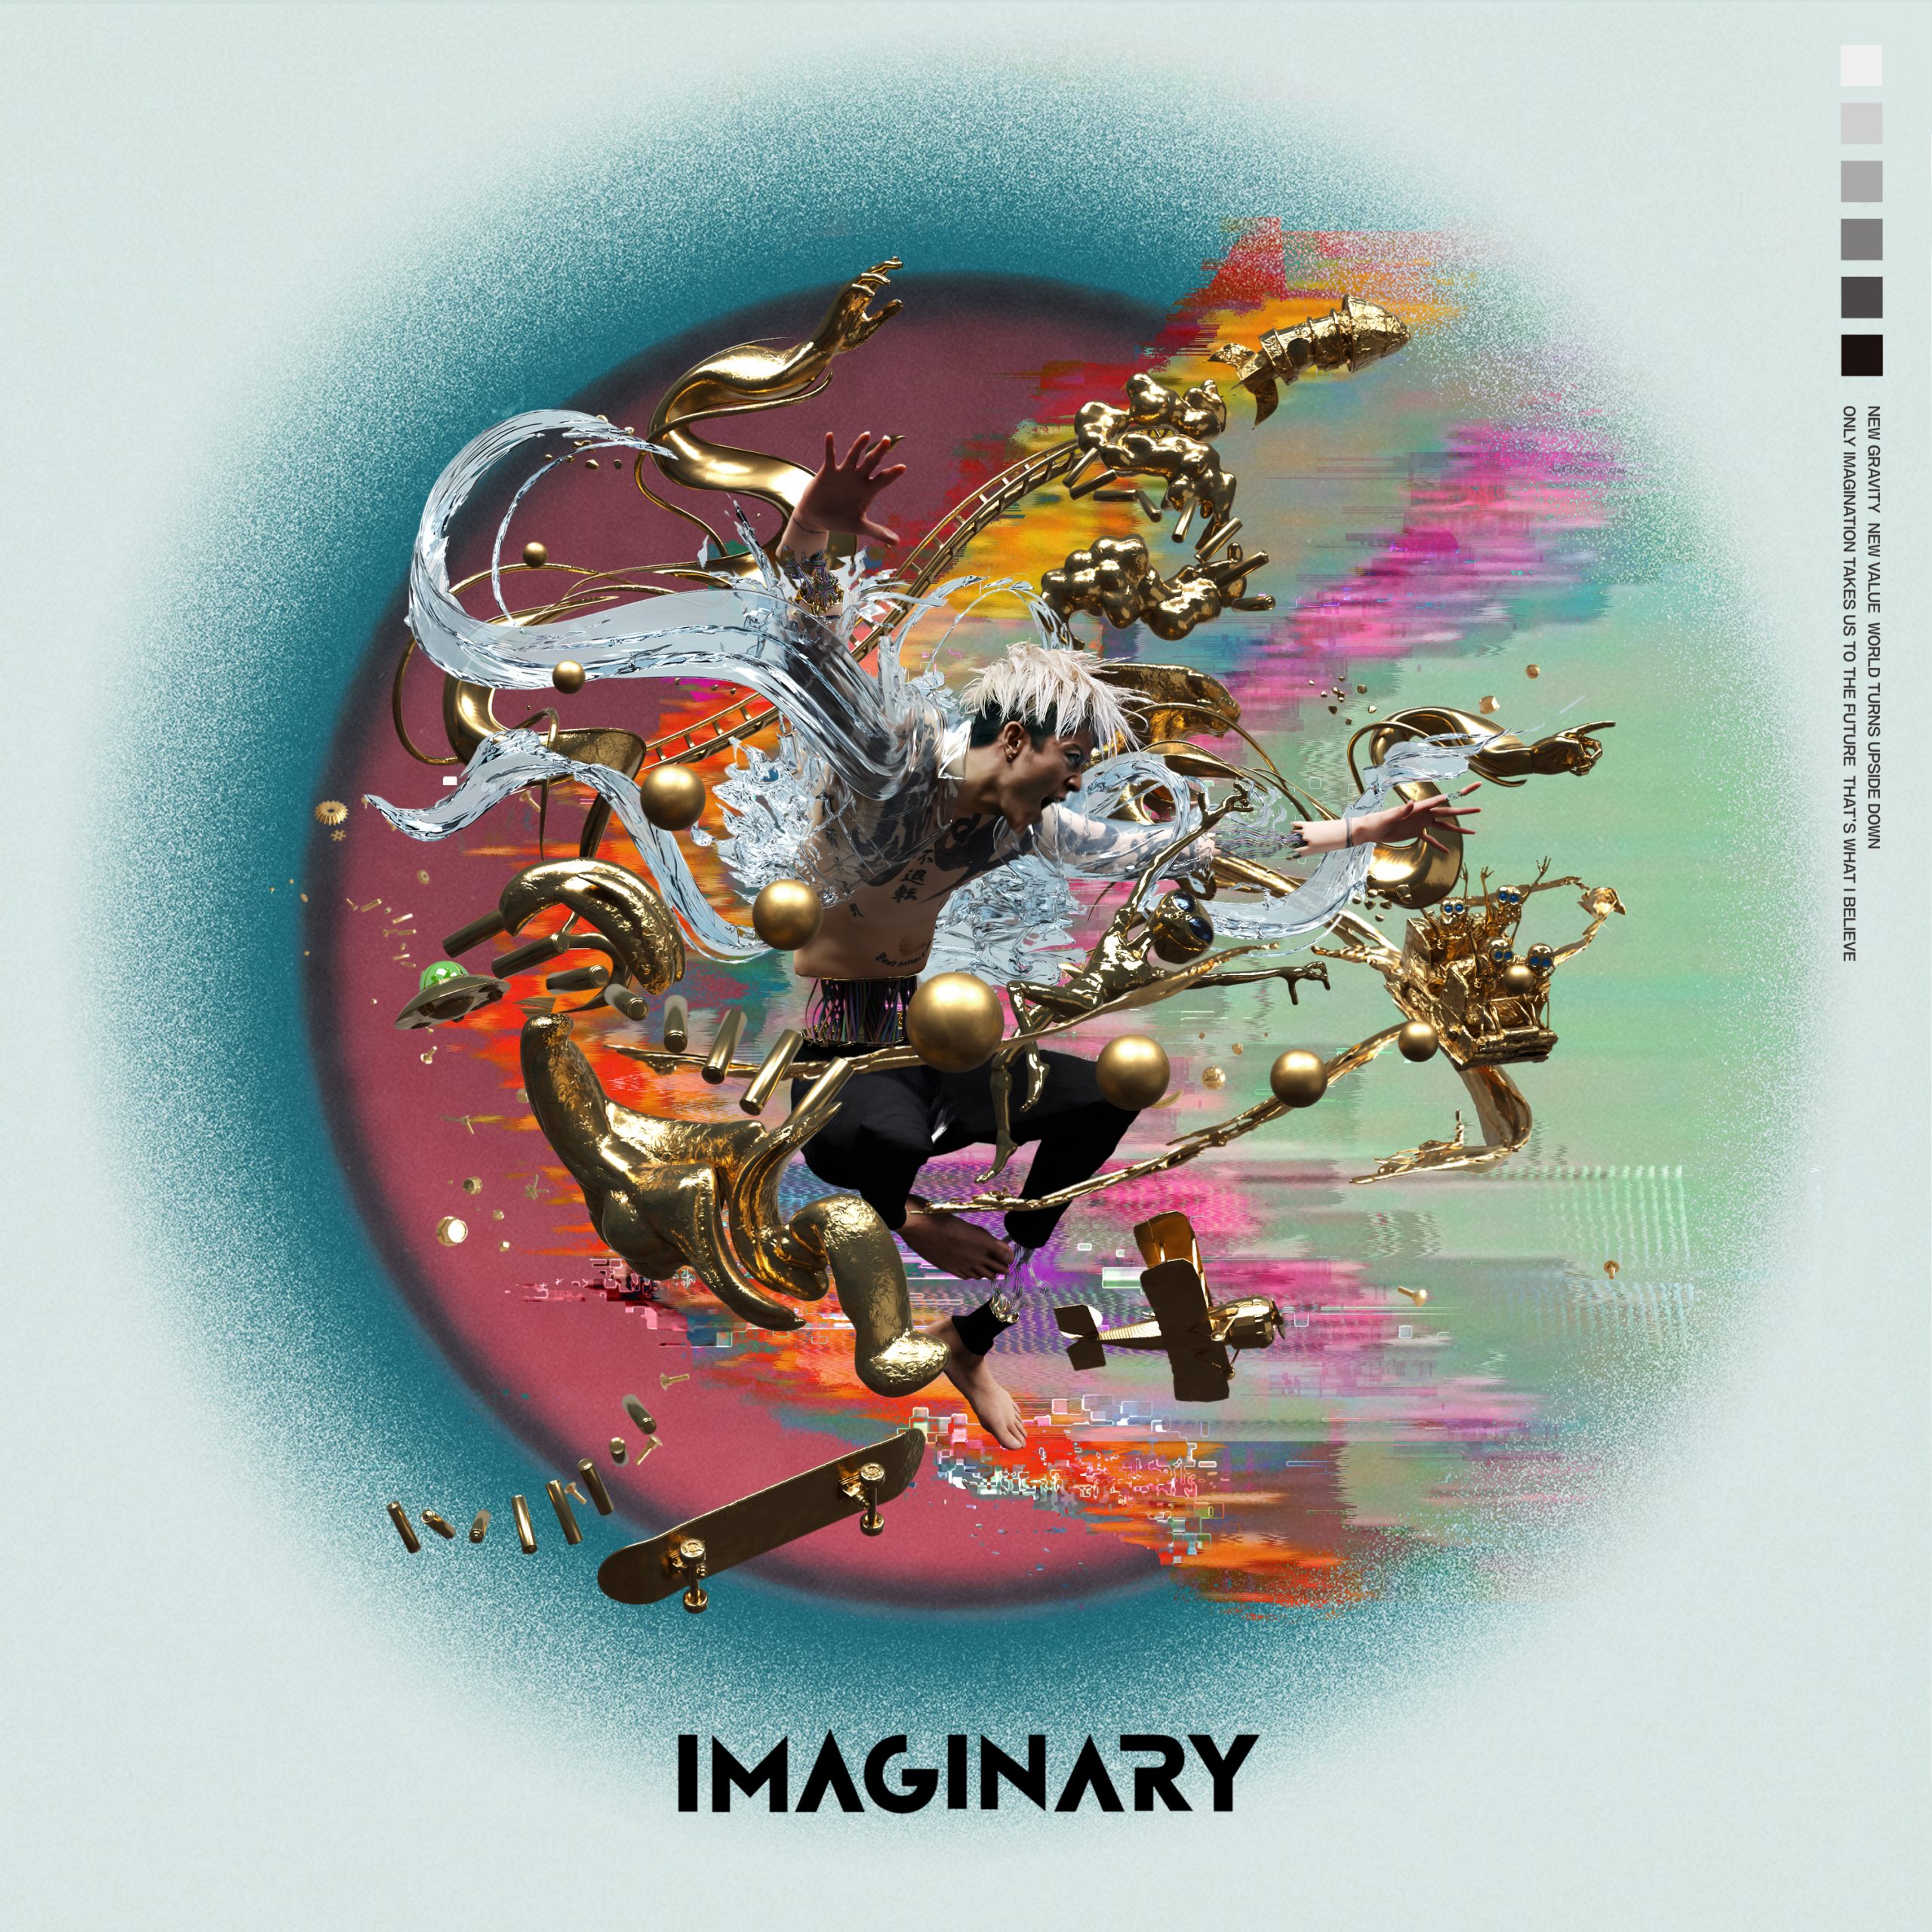 Miyavi 世界は反転する 想像の力で新しい世界へ飛び込め 13thオリジナル フルアルバム Imaginary Newアーティスト写真 ジャケット写真公開 リード曲 New Gravity 本日先行配信 アルバム予約開始 アルバム収録全11曲トラックリスト